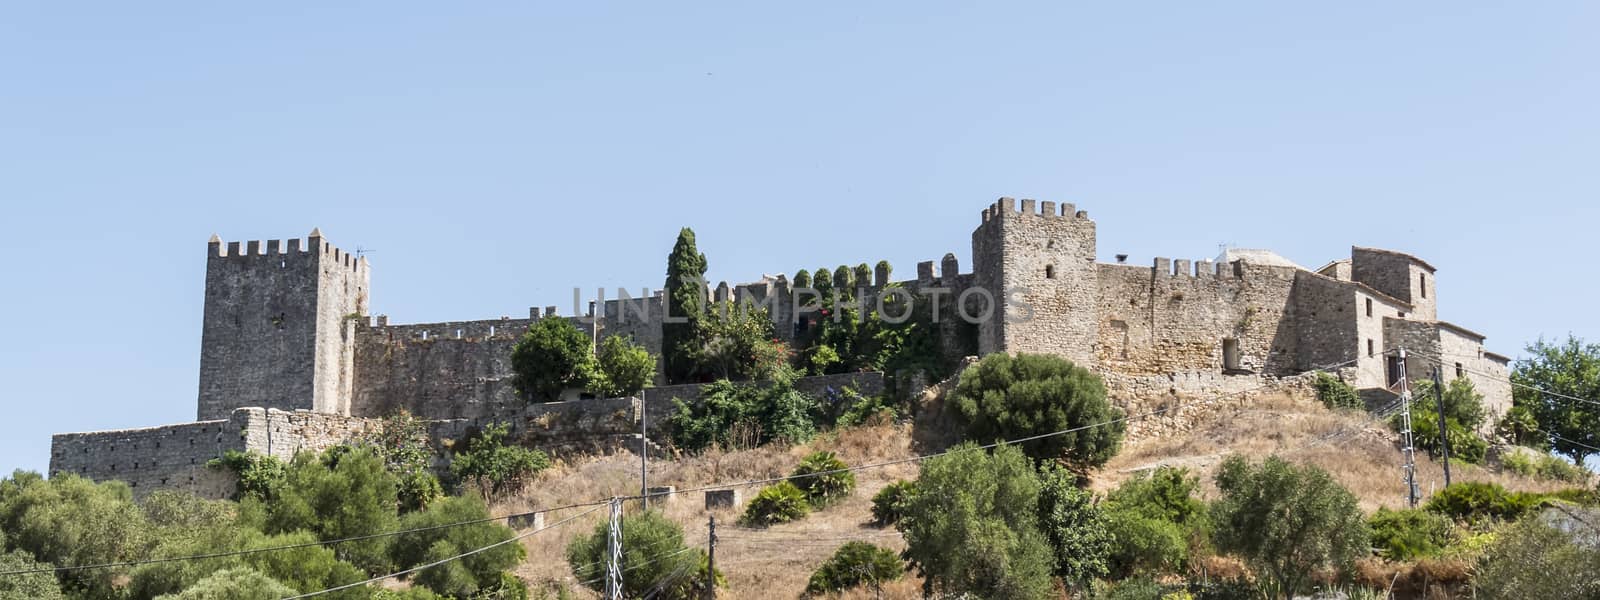 Castellar de la Frontera Castle, Andalusia, Spain by max8xam